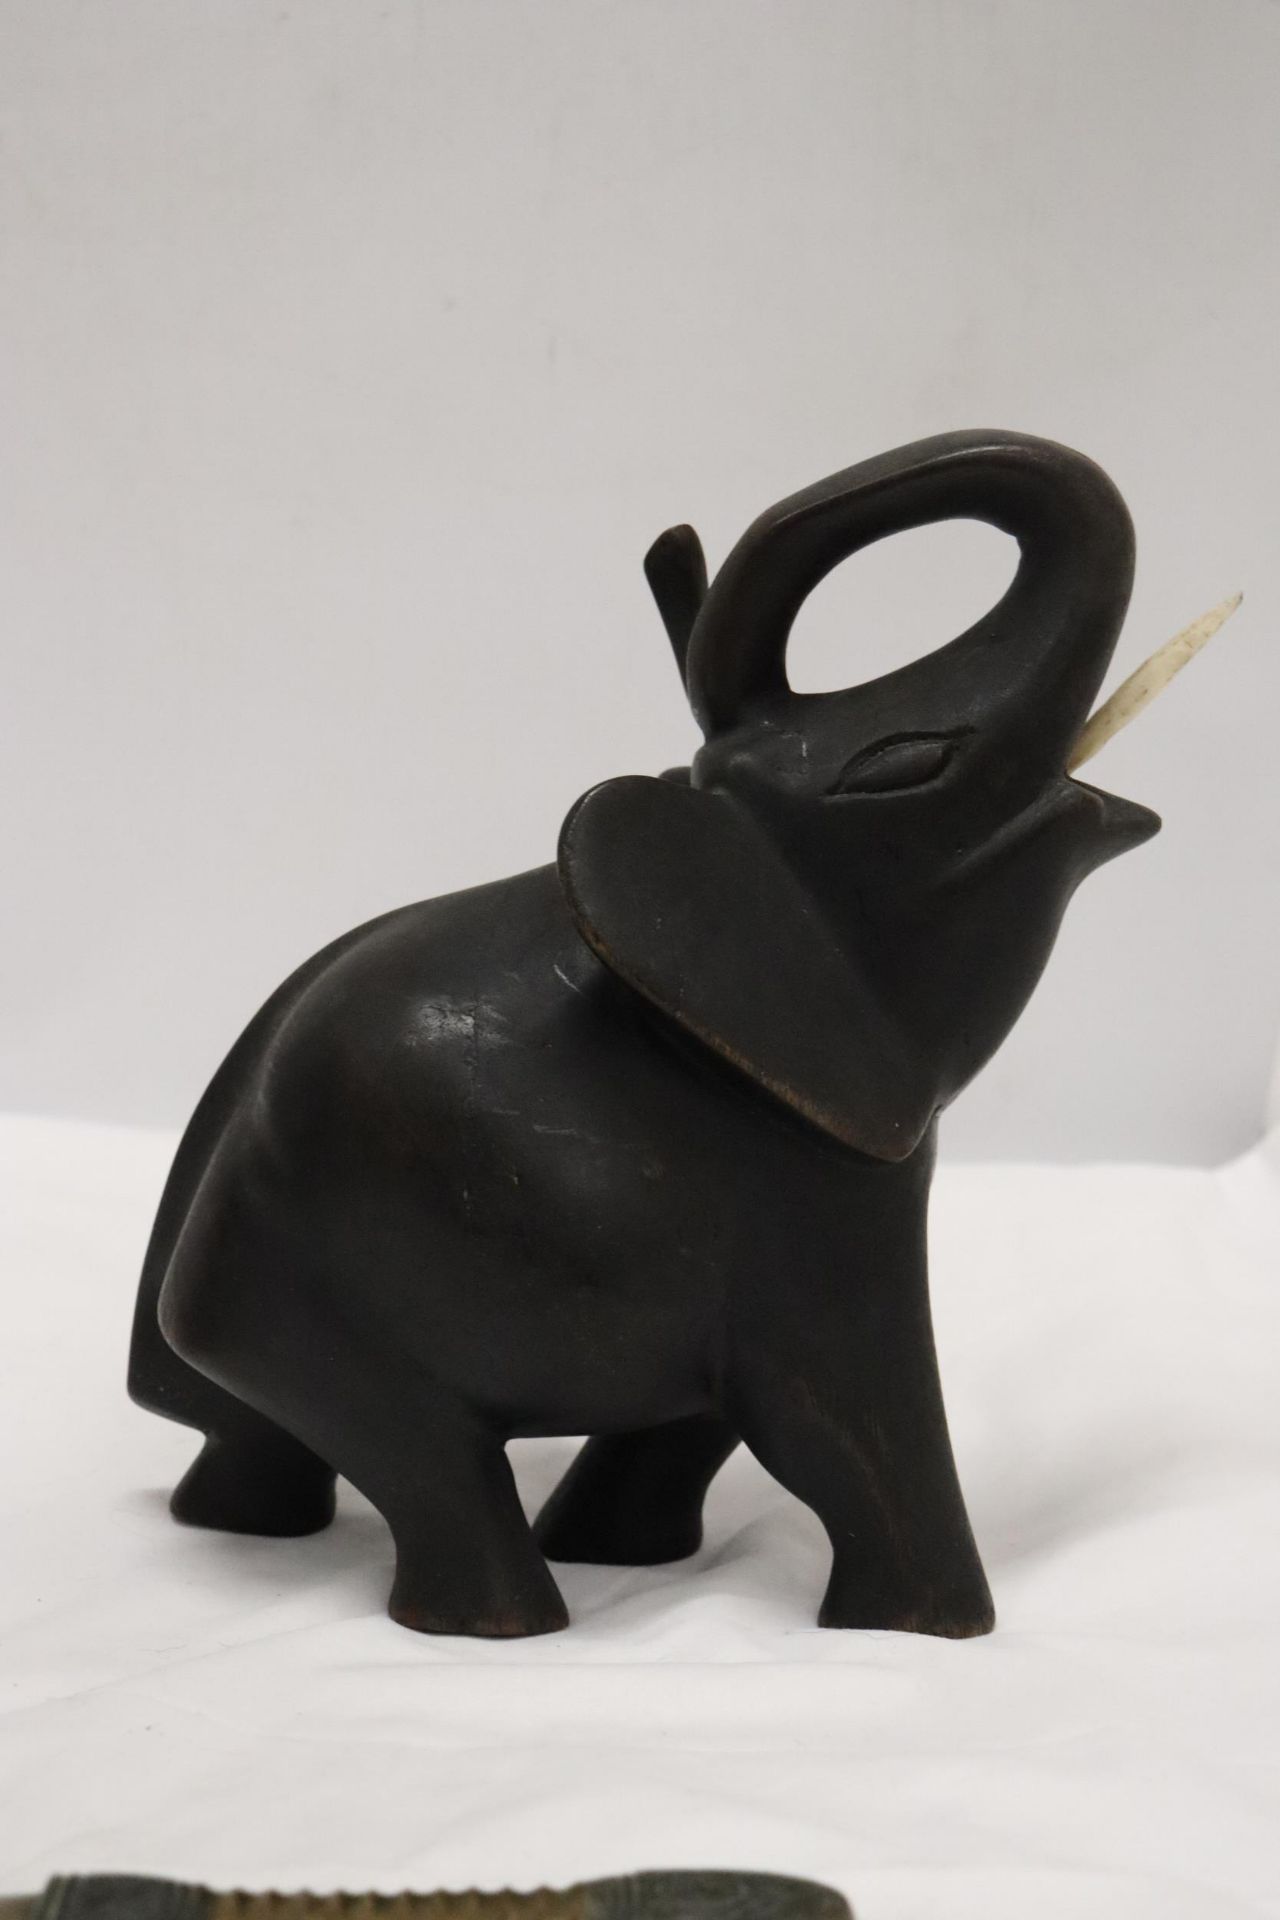 A HARDWOOD CARVED ELEPHANT, STONE ELEPHANT, MISSING A LEG AND A BRASS KNIFE - Image 12 of 12